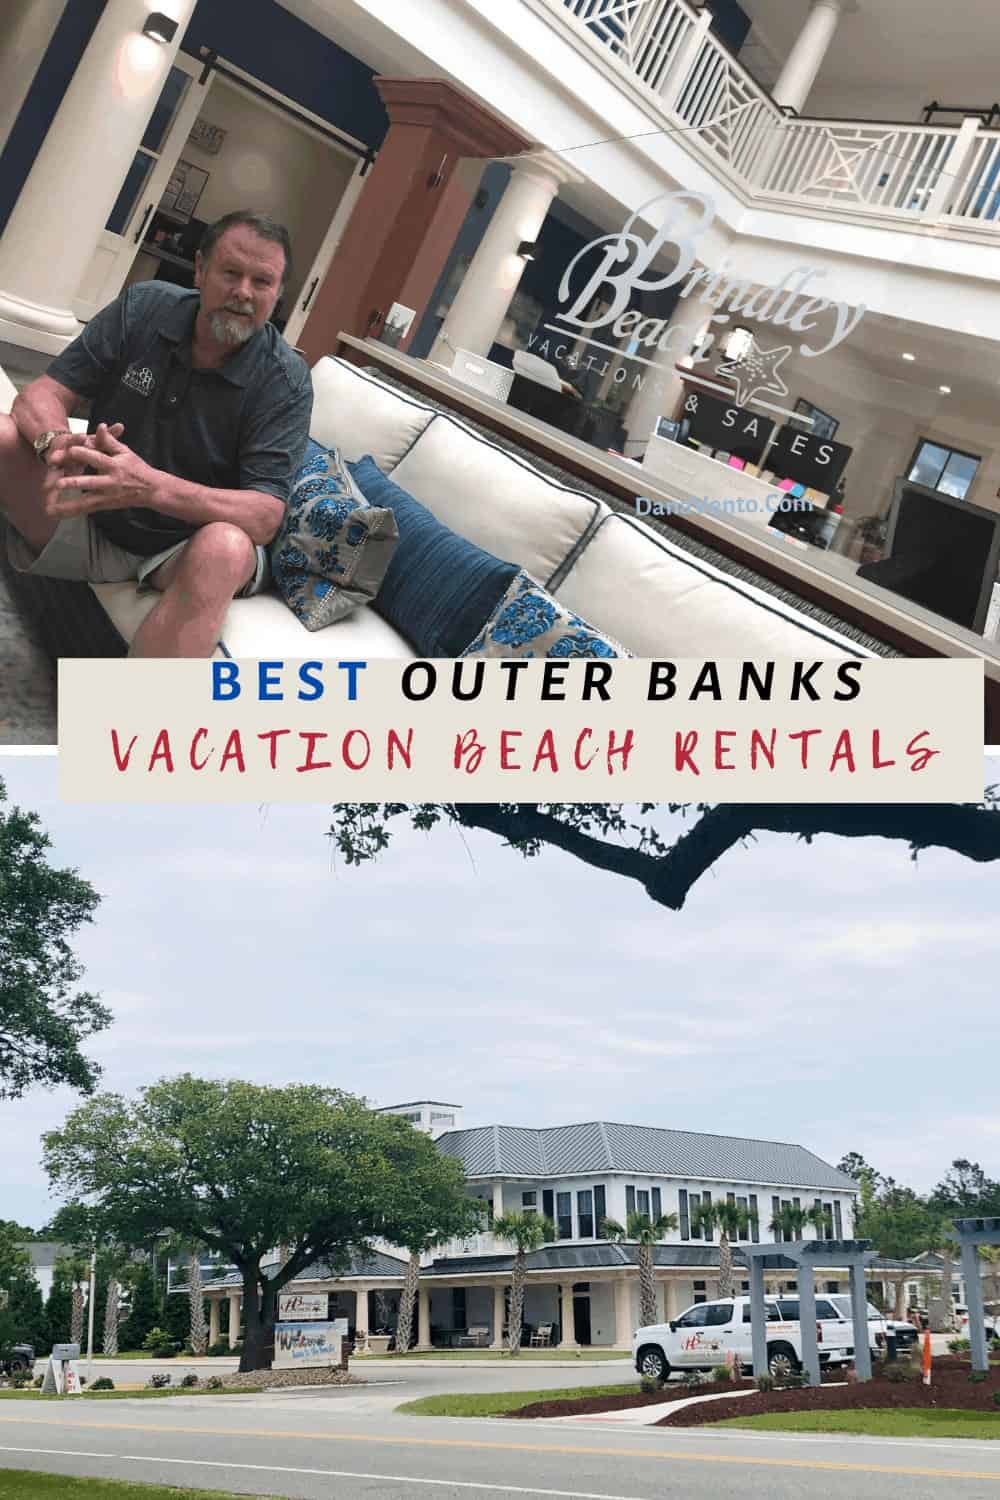 Mr. Doug Brindley of Brindley Beach Vacations and Sales